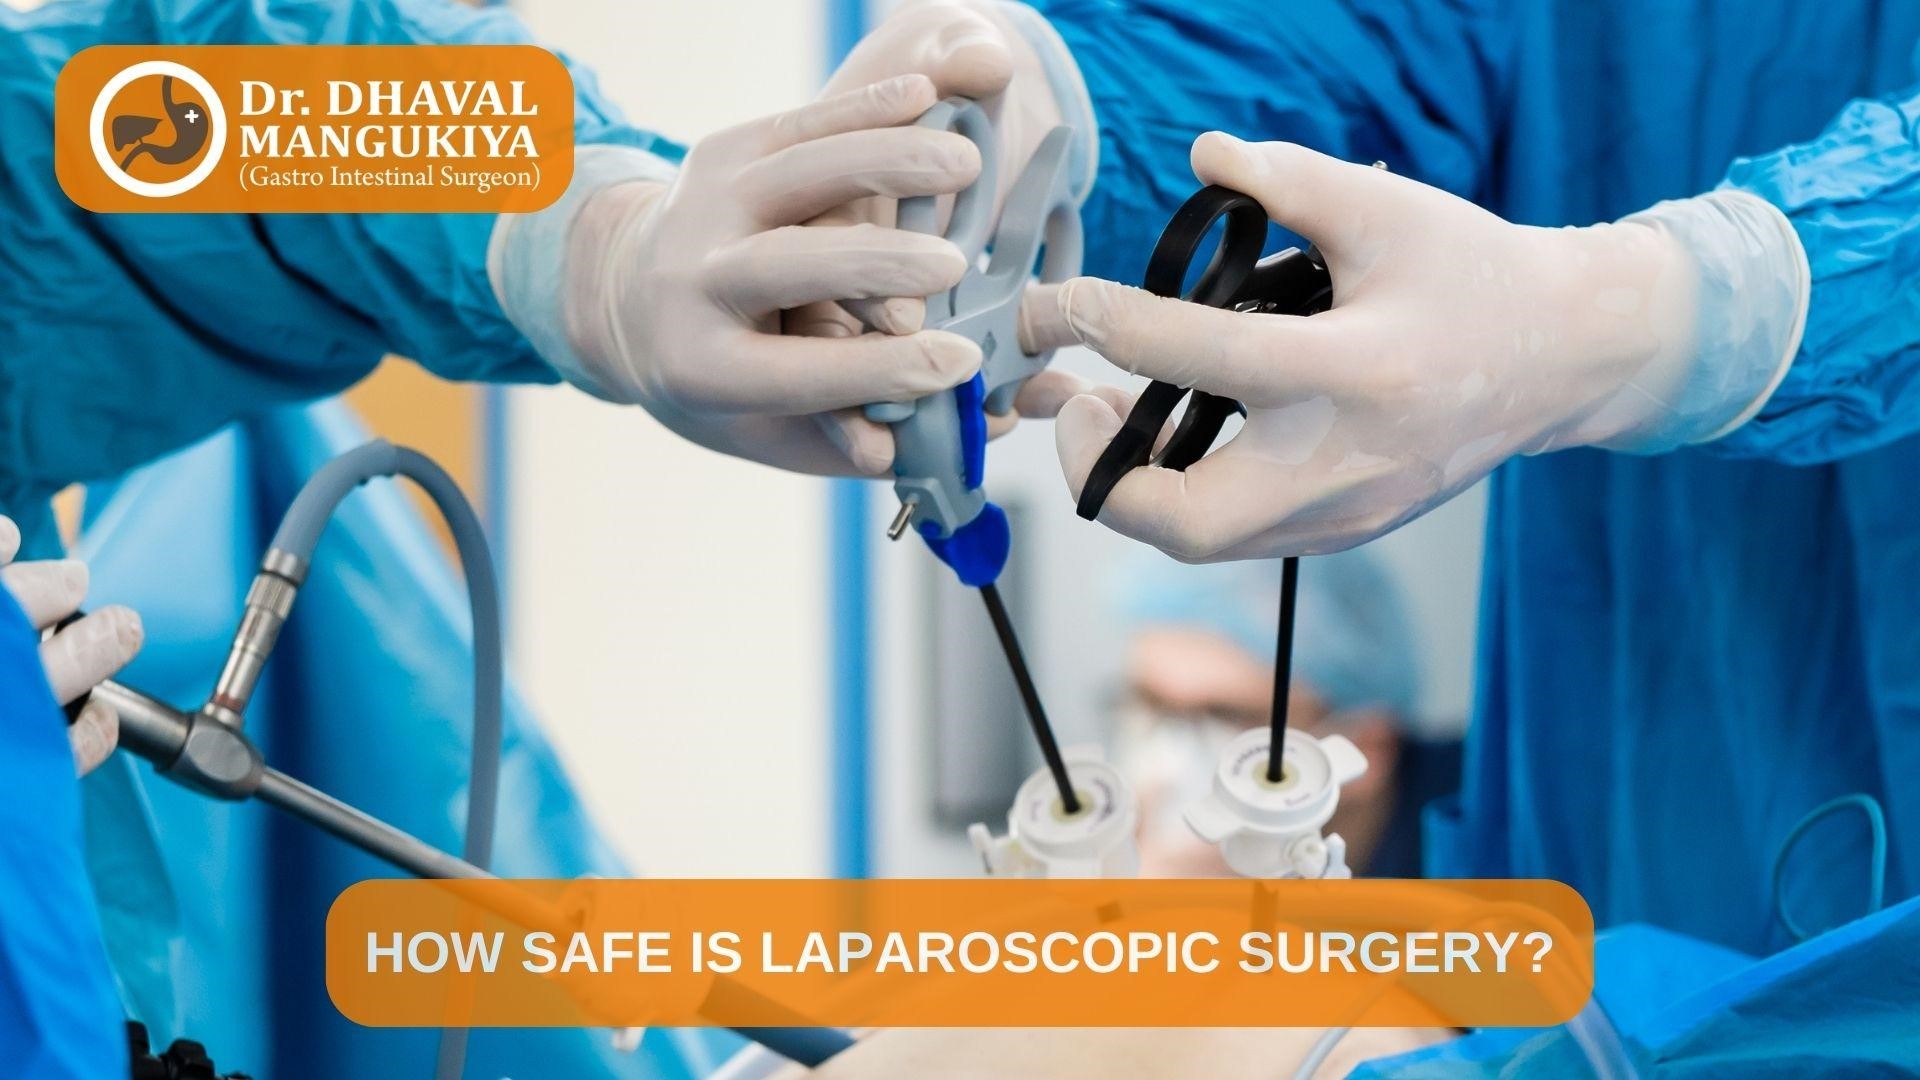 How Safe is Laparoscopic Surgery? - Dr Dhaval Mangukiya